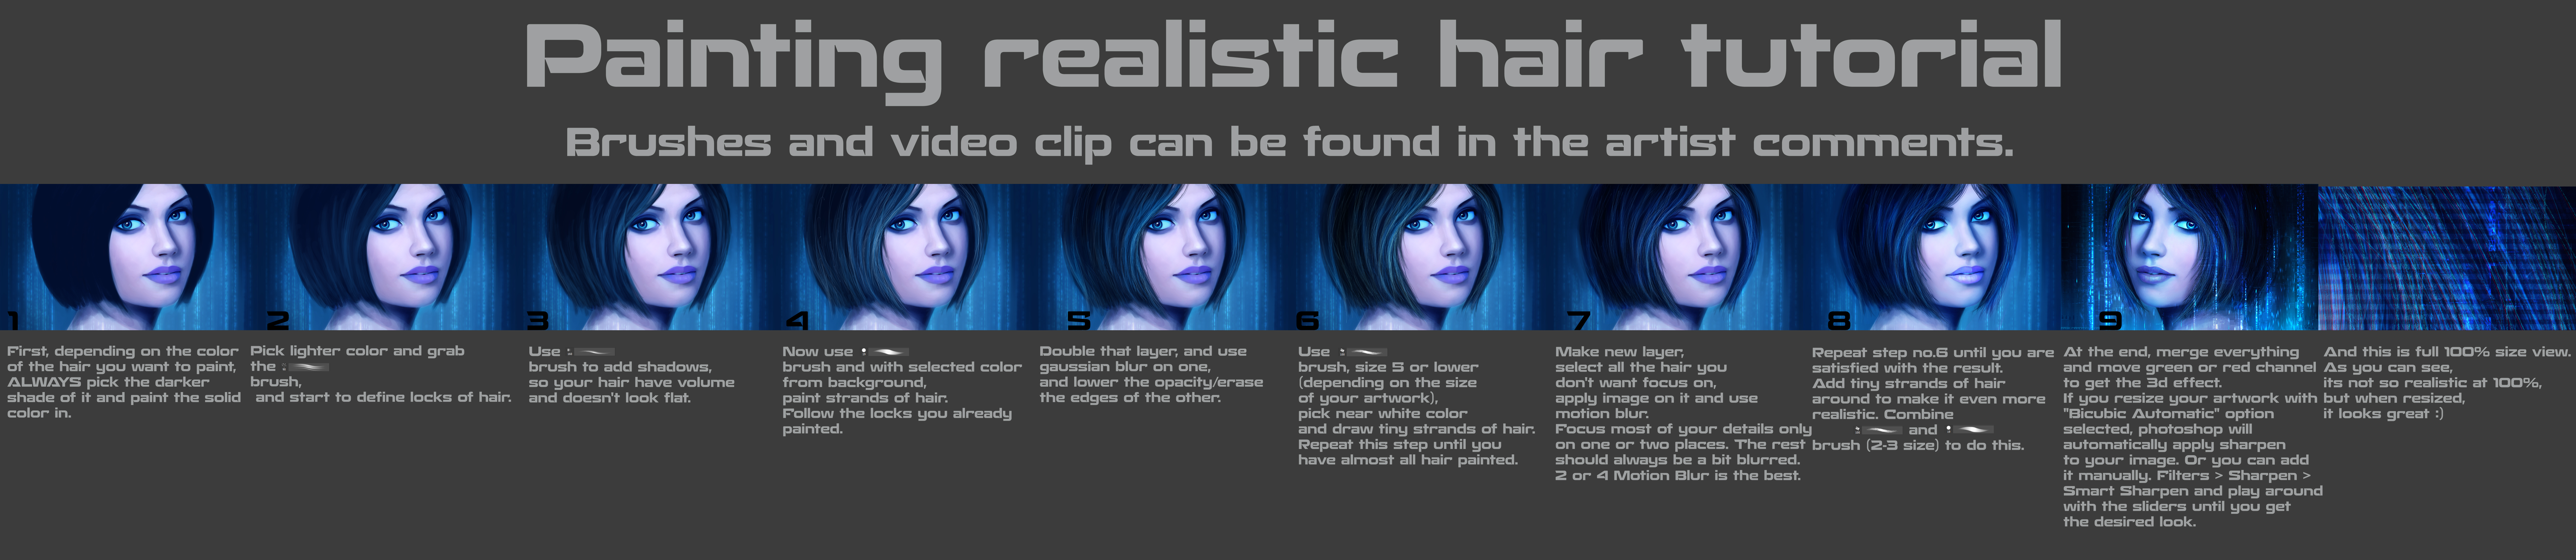 Painting realistic hair tutorial